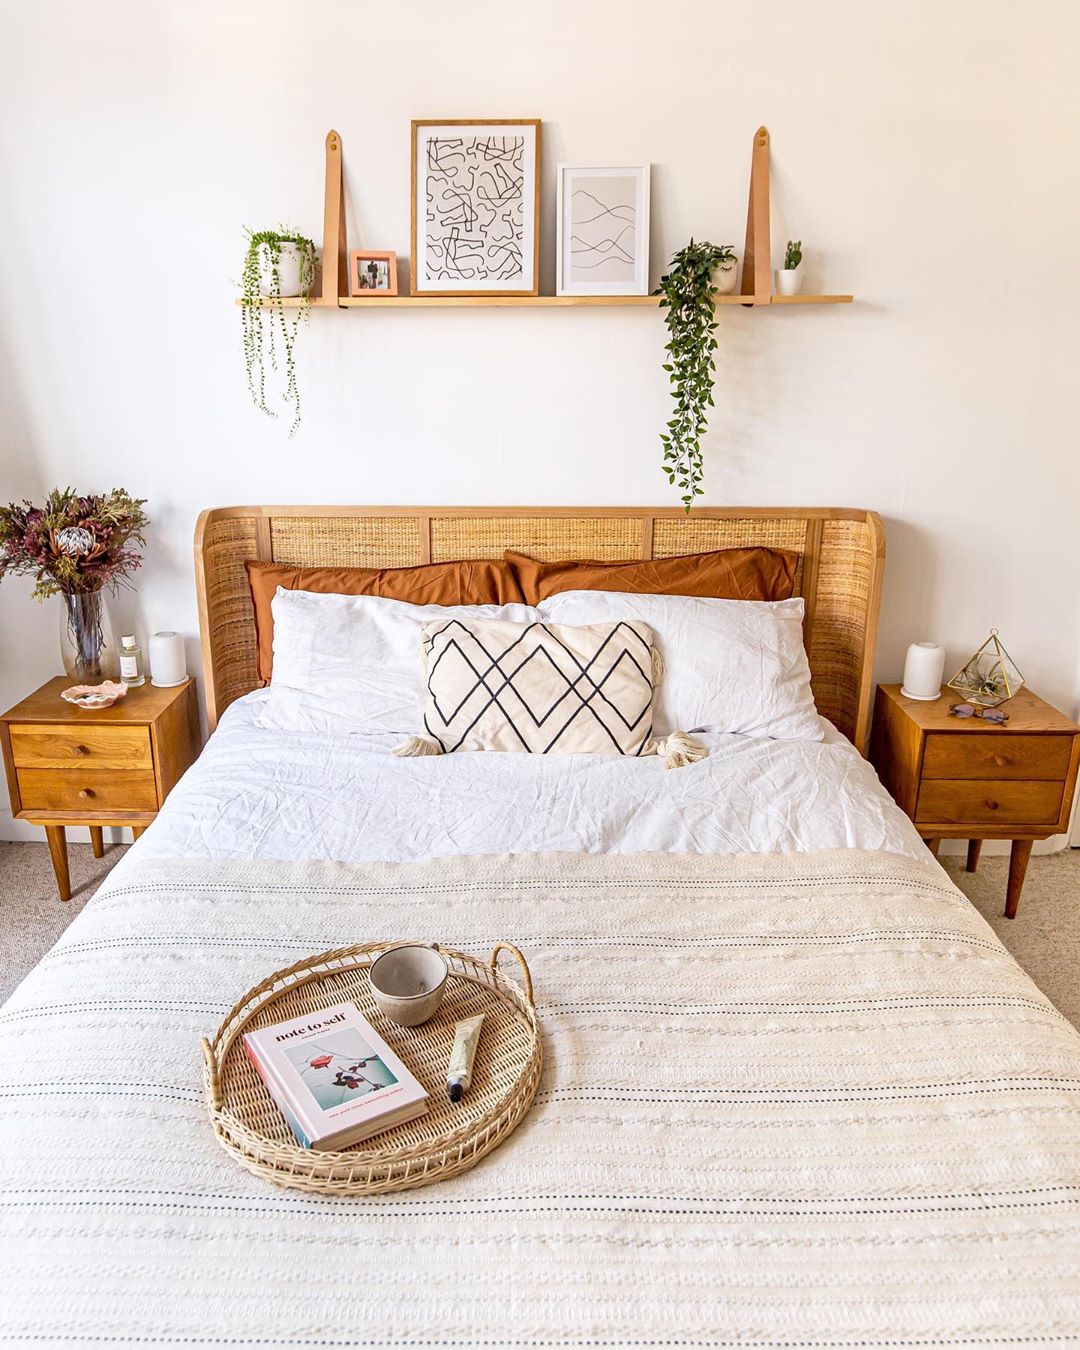 Bedroom with wicker headboard. Photo by Instagram user @homewithkelsey